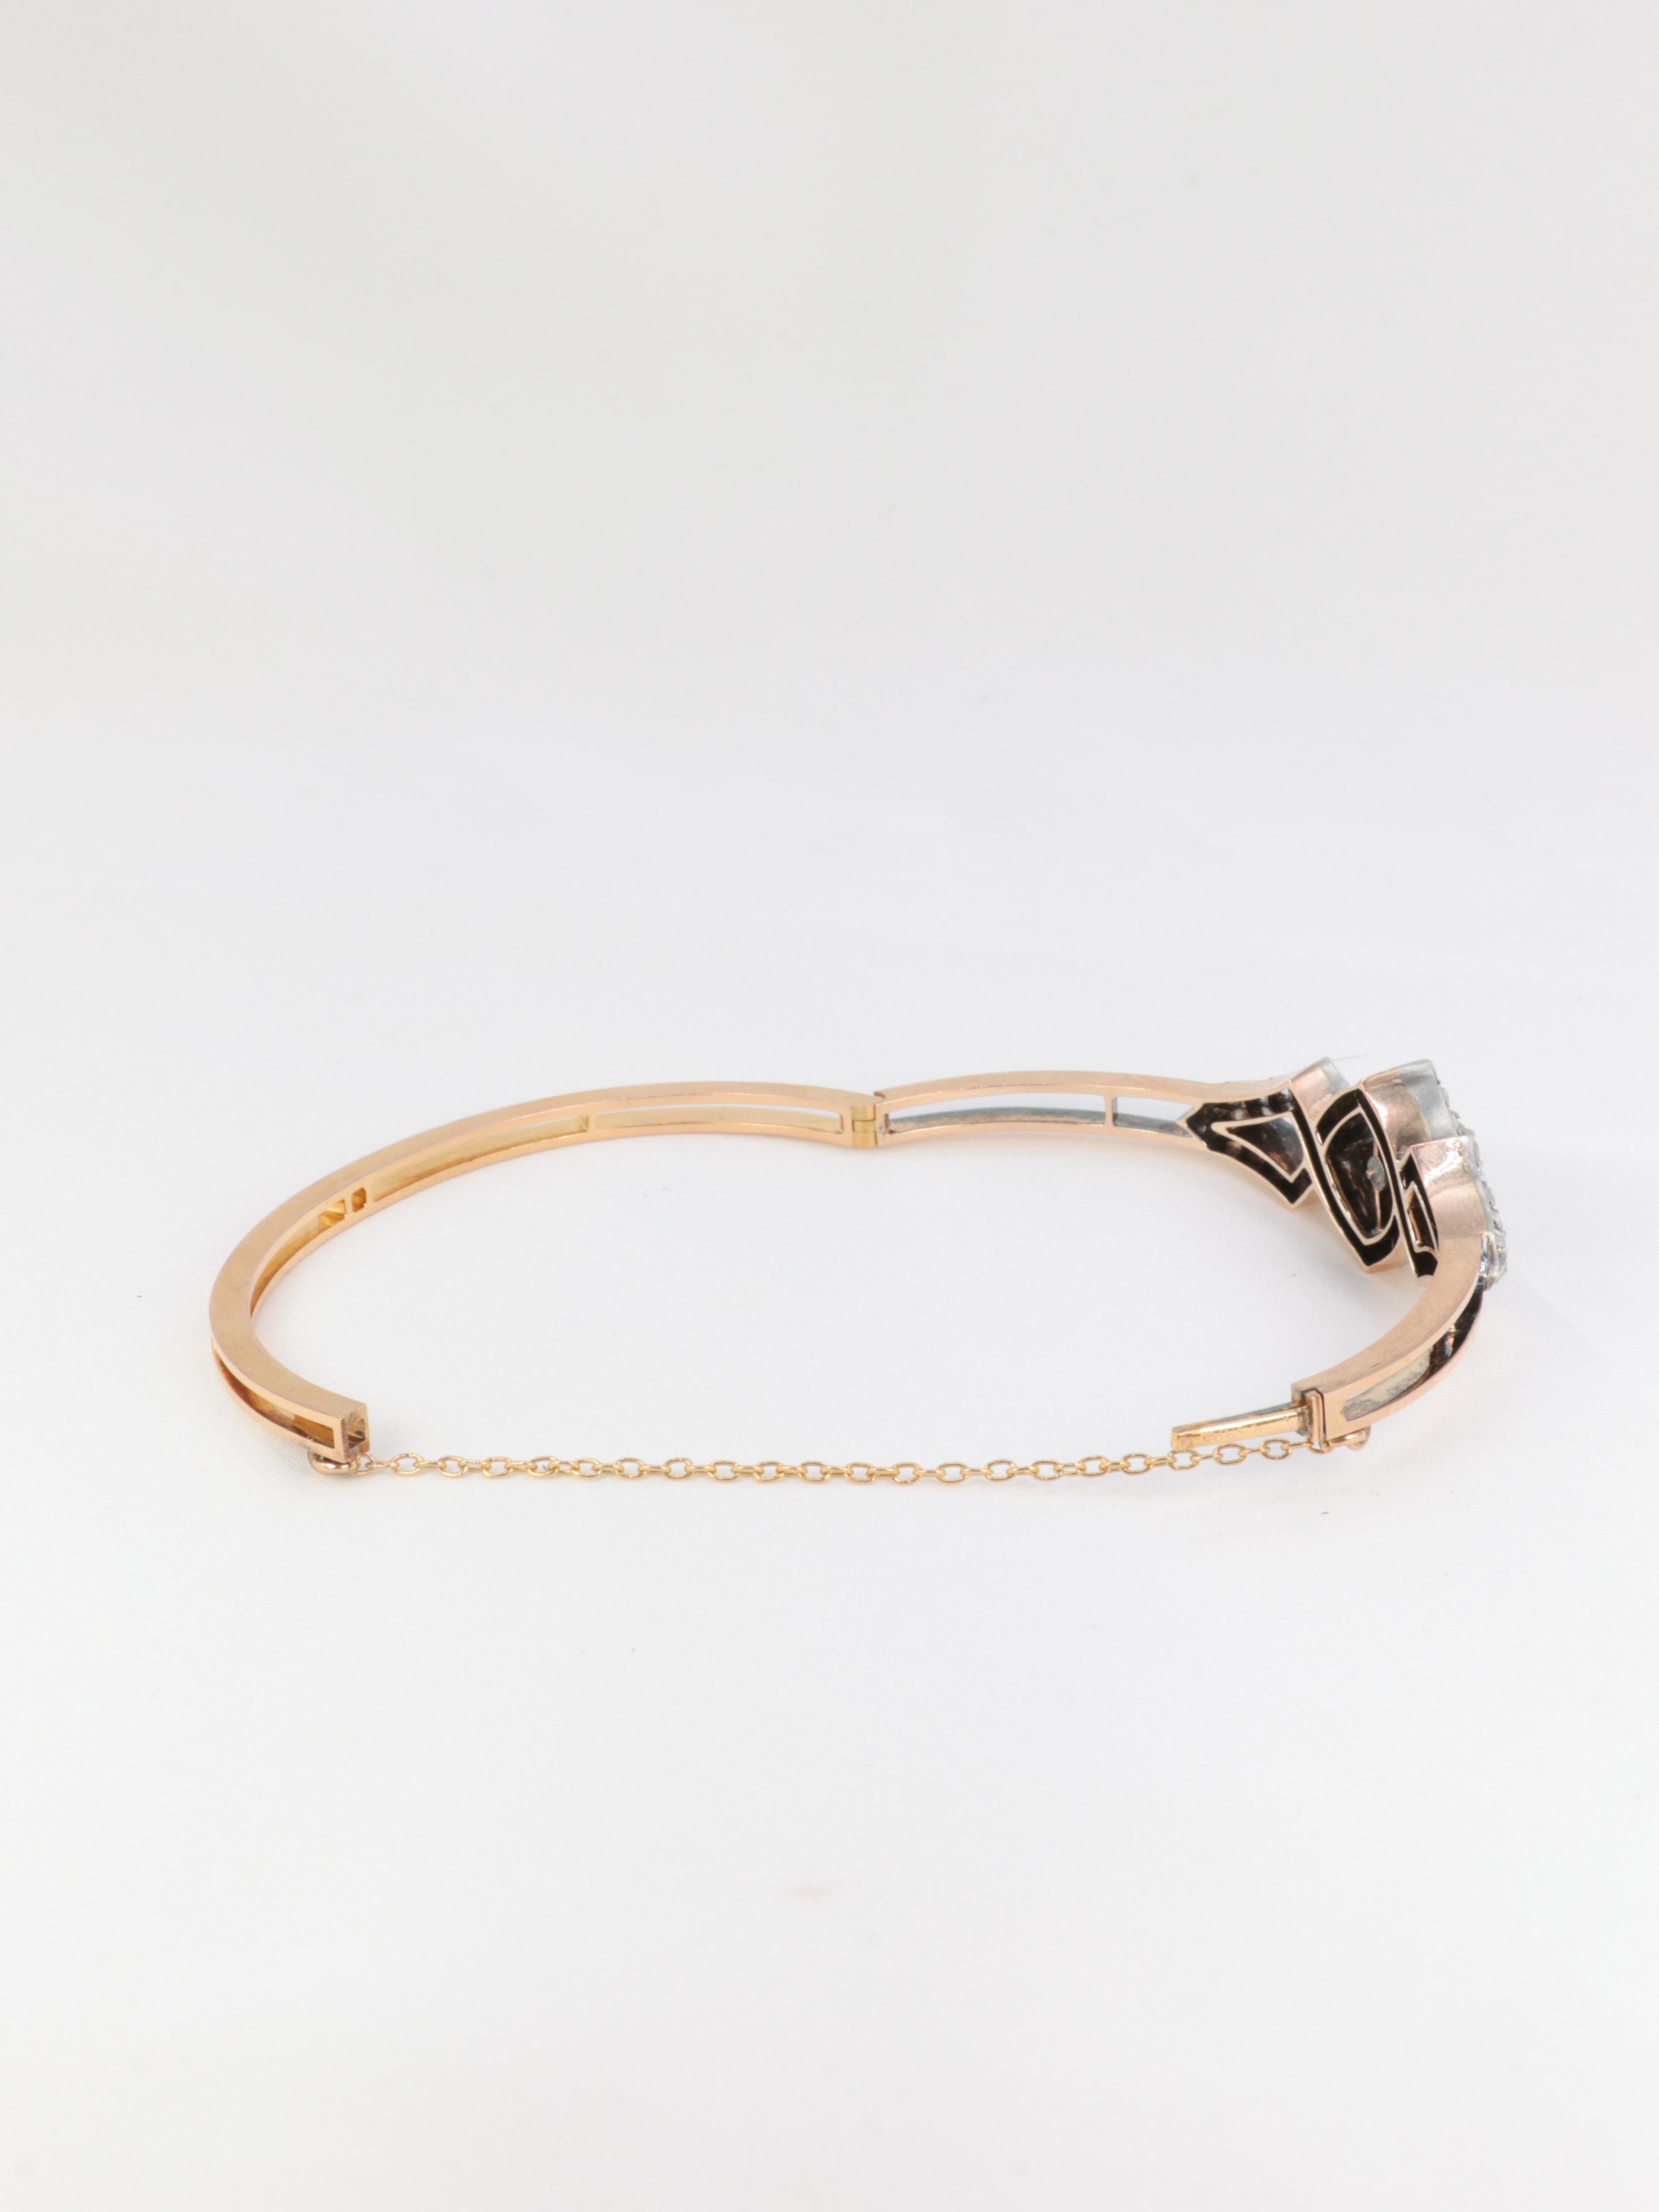 Rose Gold Antique Bangle Bracelet Set with Old Mine Cut Diamonds, Late 19th C. For Sale 8